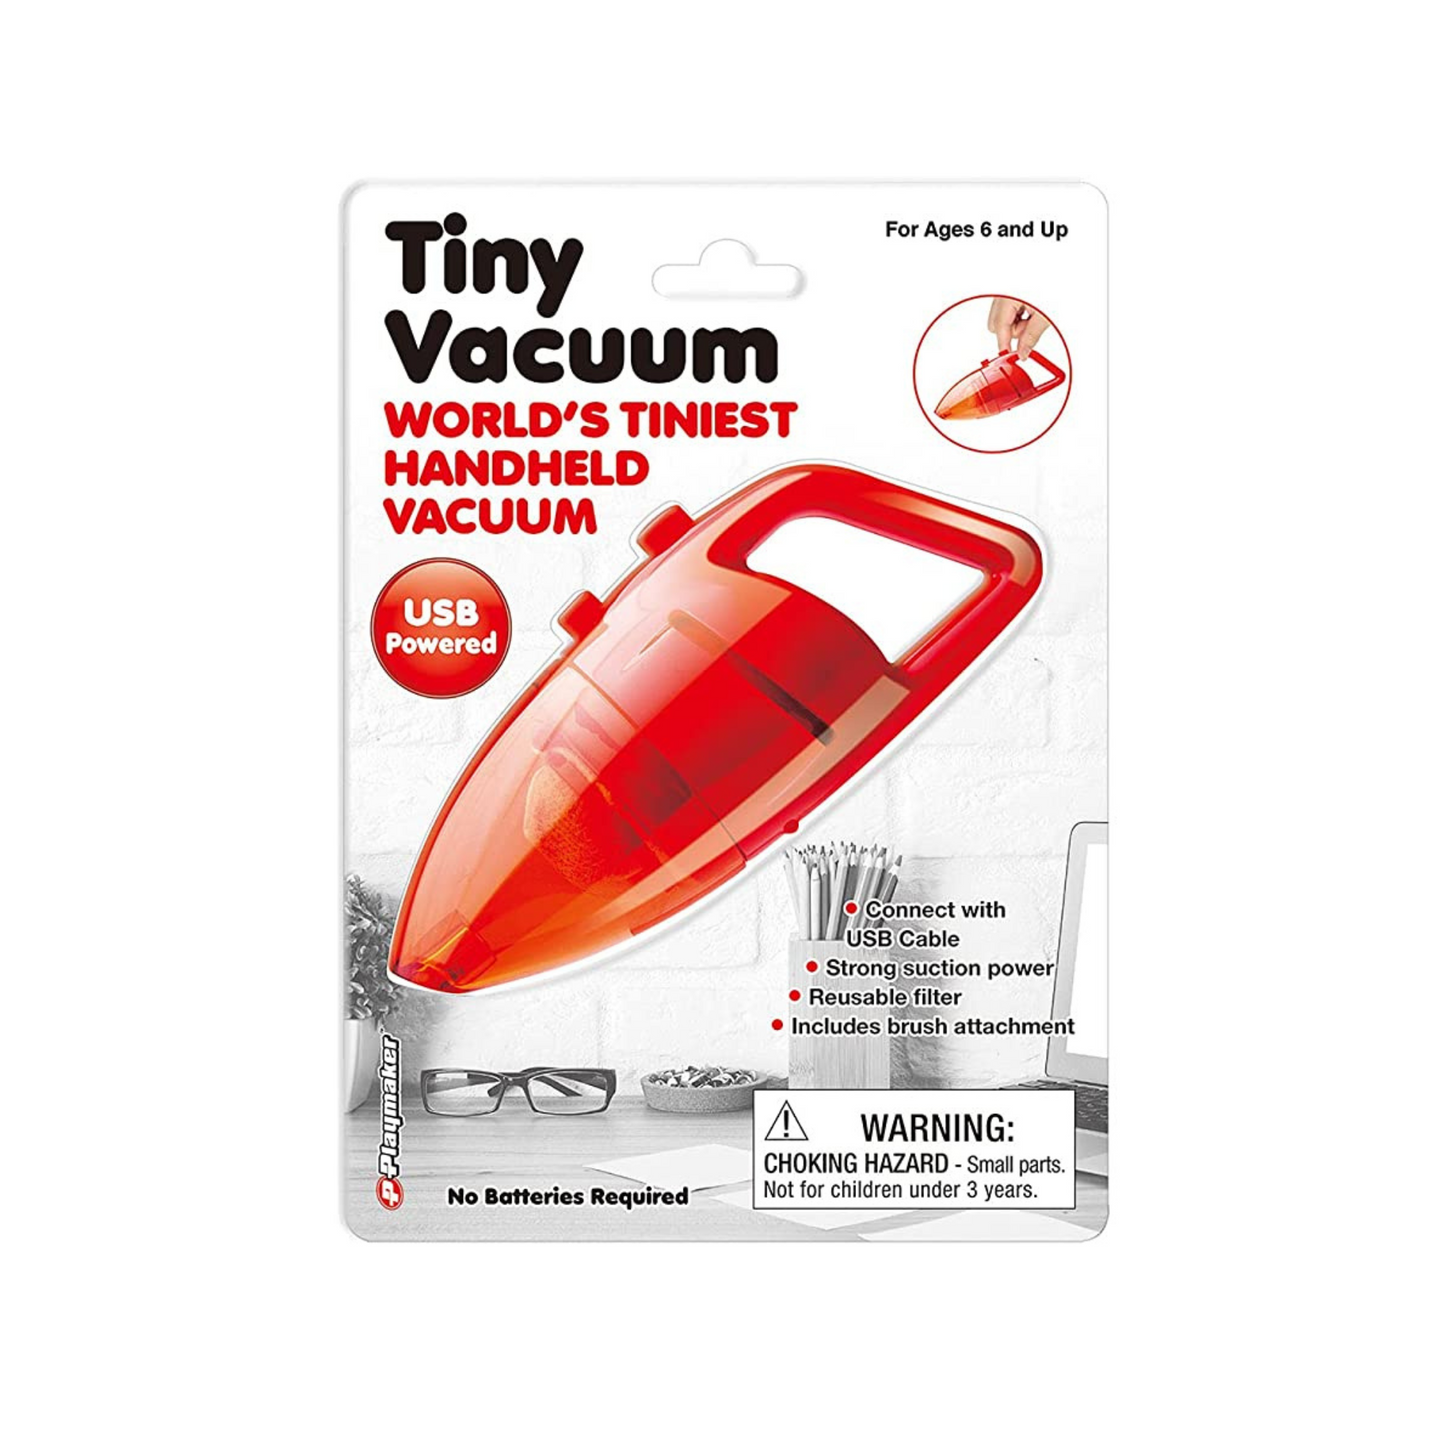 world's tiniest vacuum in package